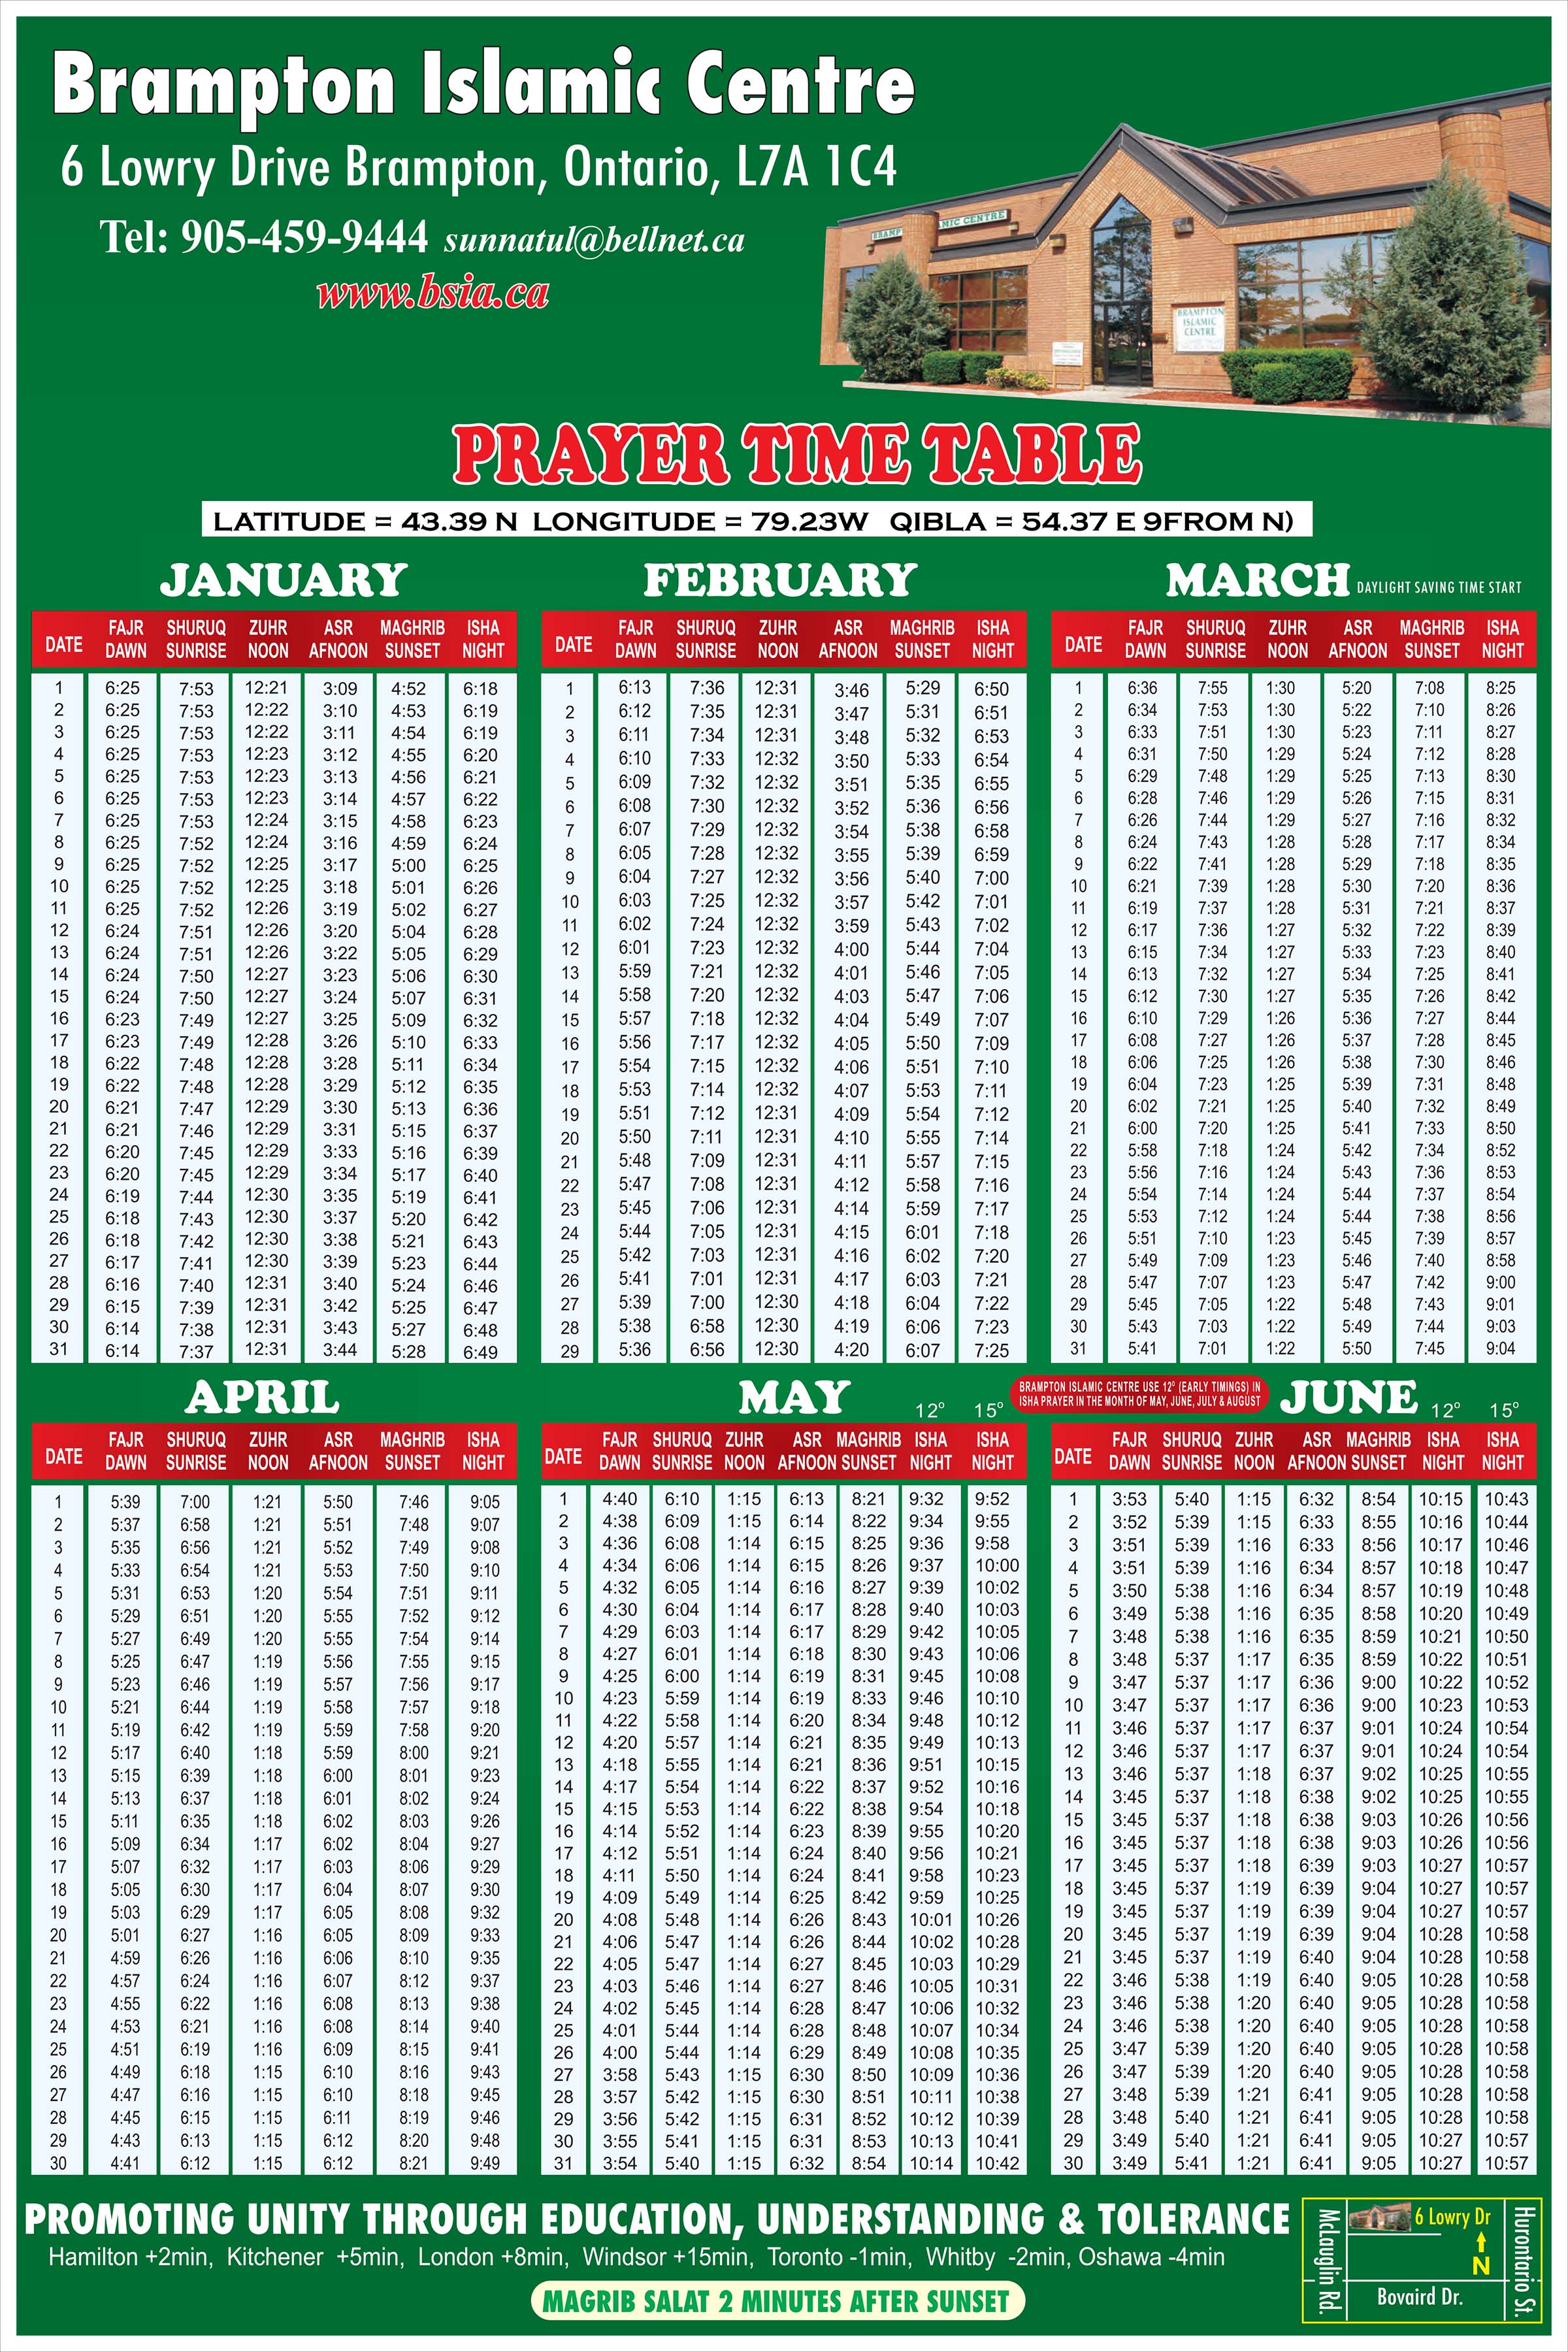 Monthly Salah Chart